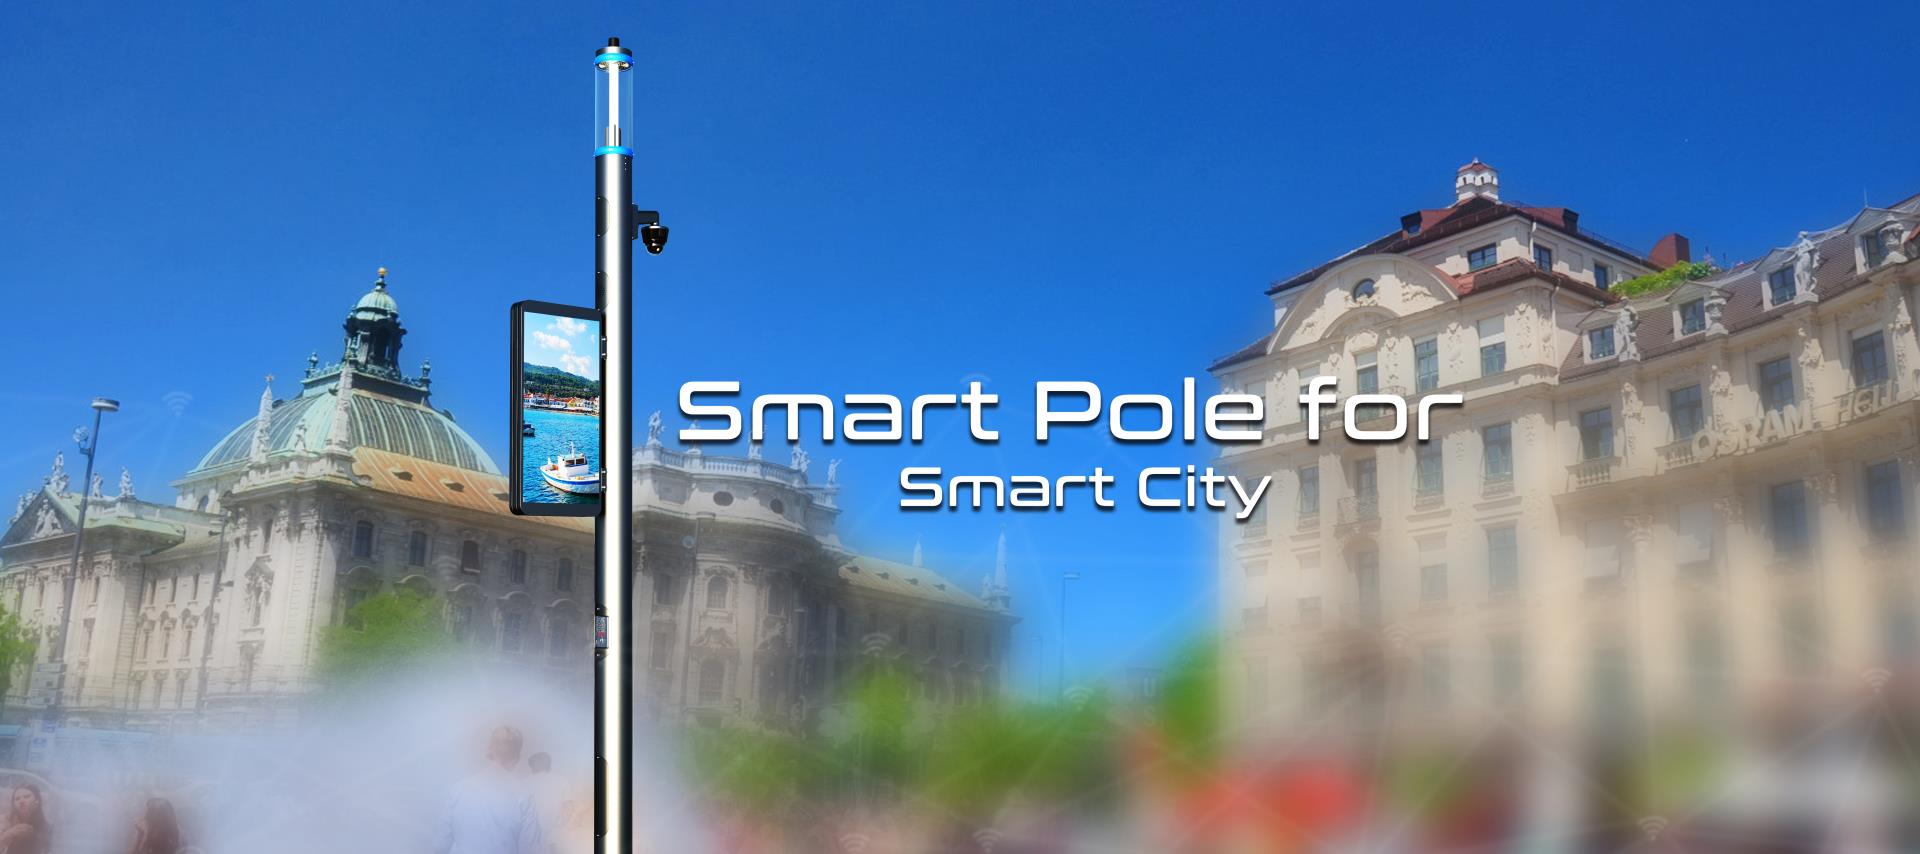 Smart Pole for Smart City